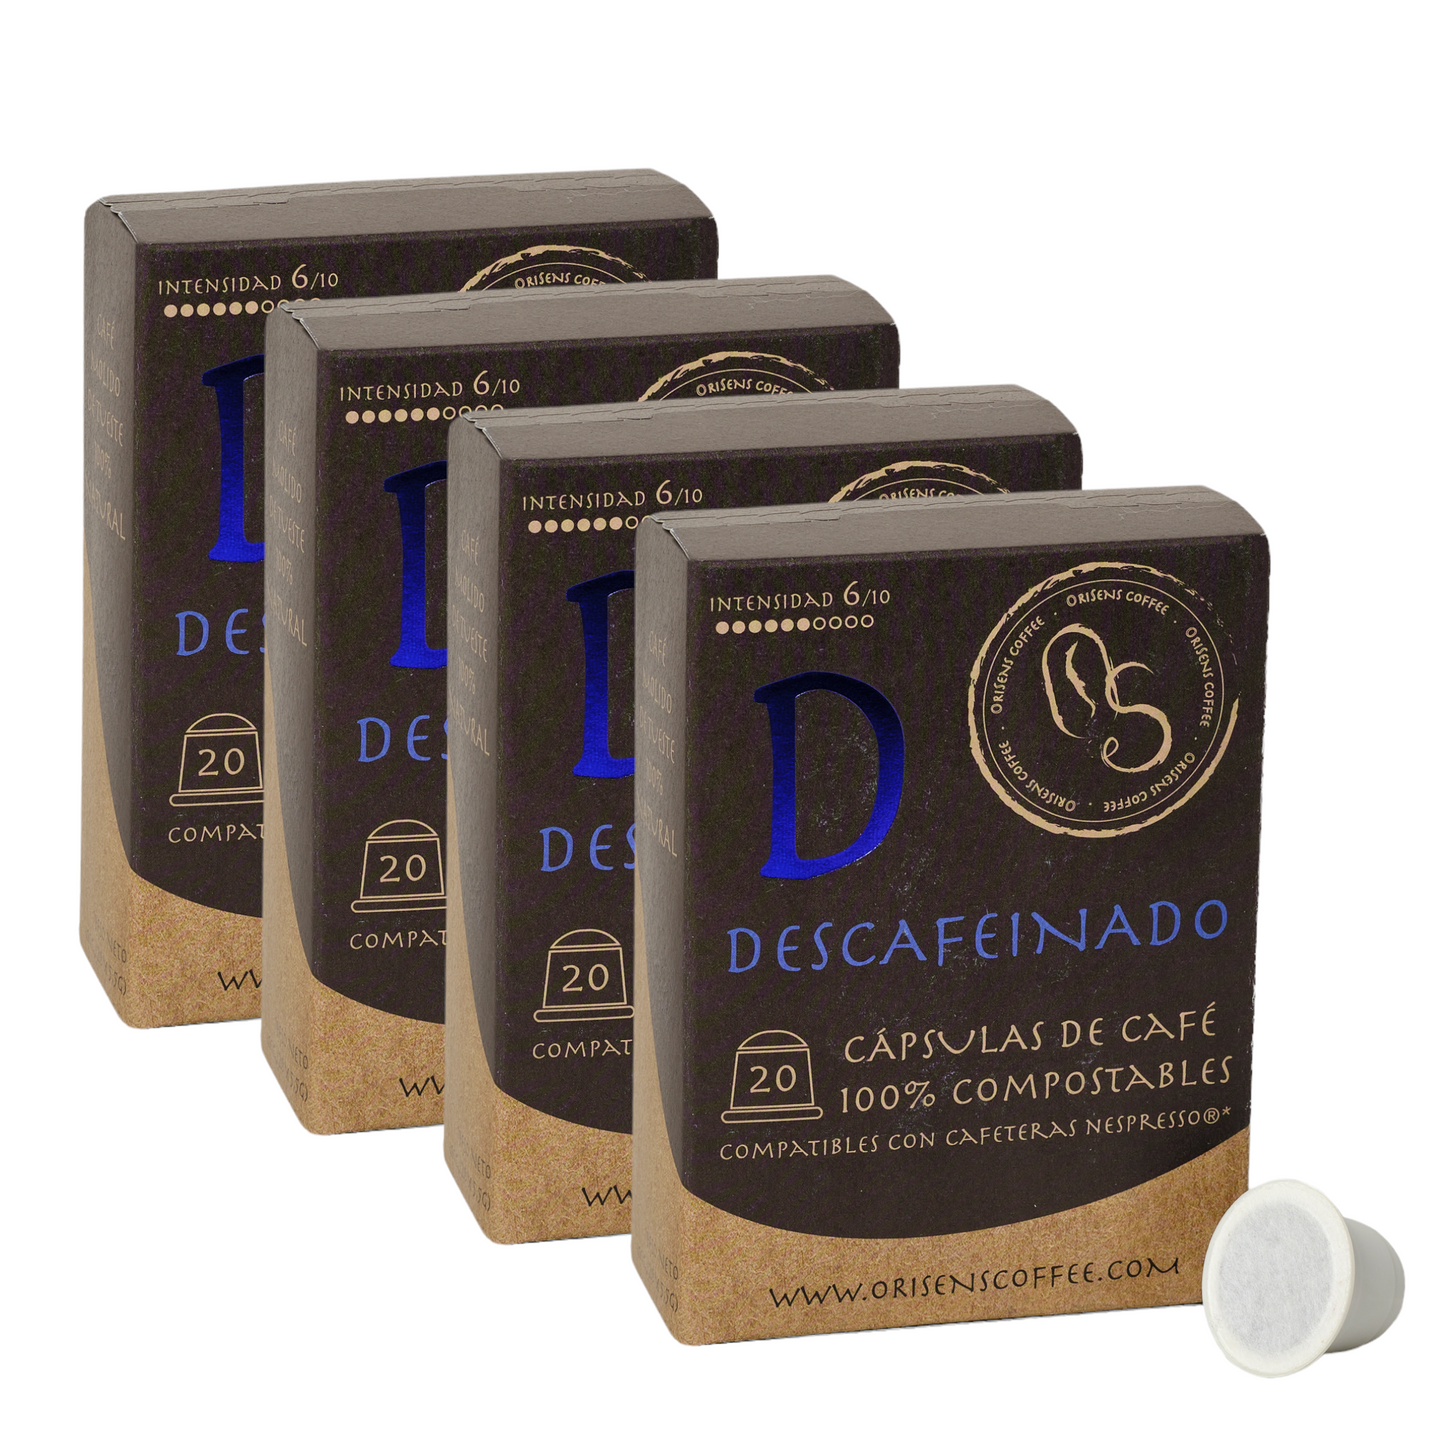 Pack de Cápsulas compatibles con Nespresso DESCAFEINADO - 100% compostables - 4 x 20 unidades